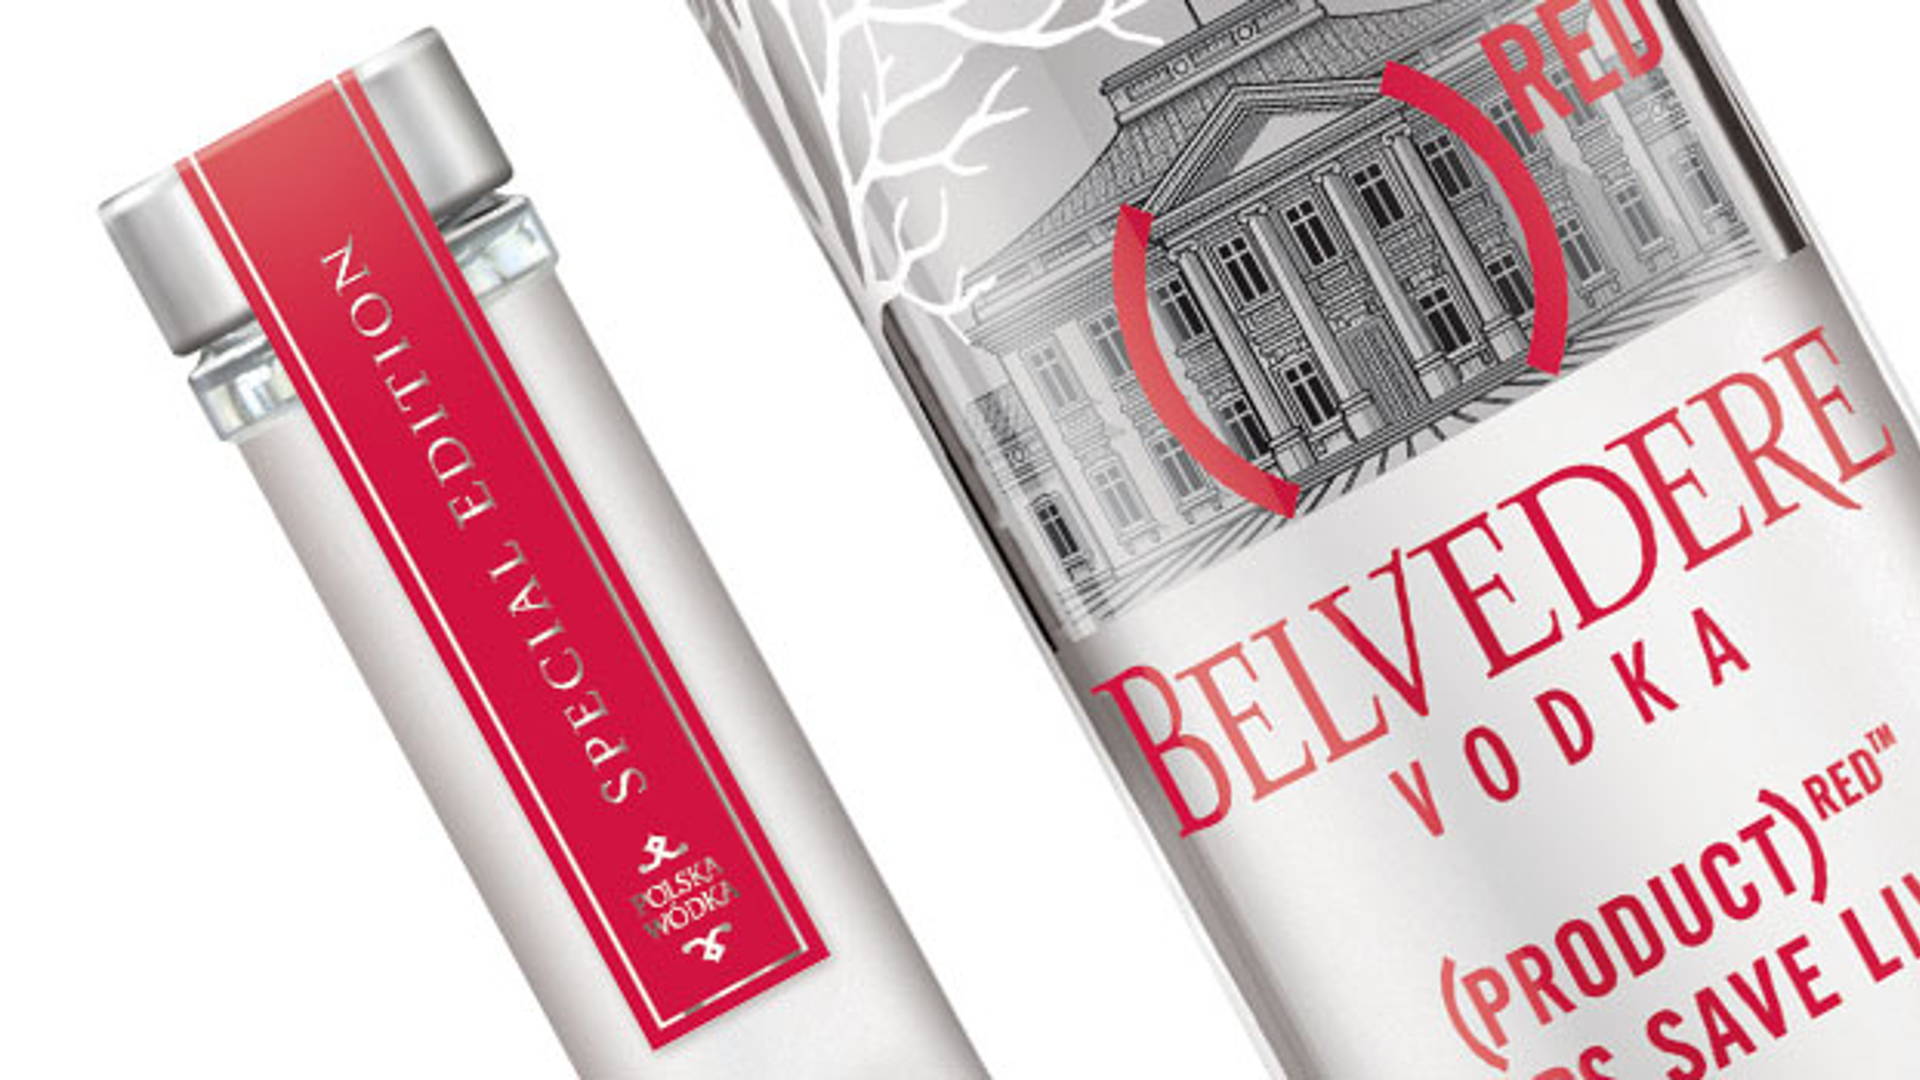 Belvedere) RED Dieline Design, Branding Packaging Inspiration